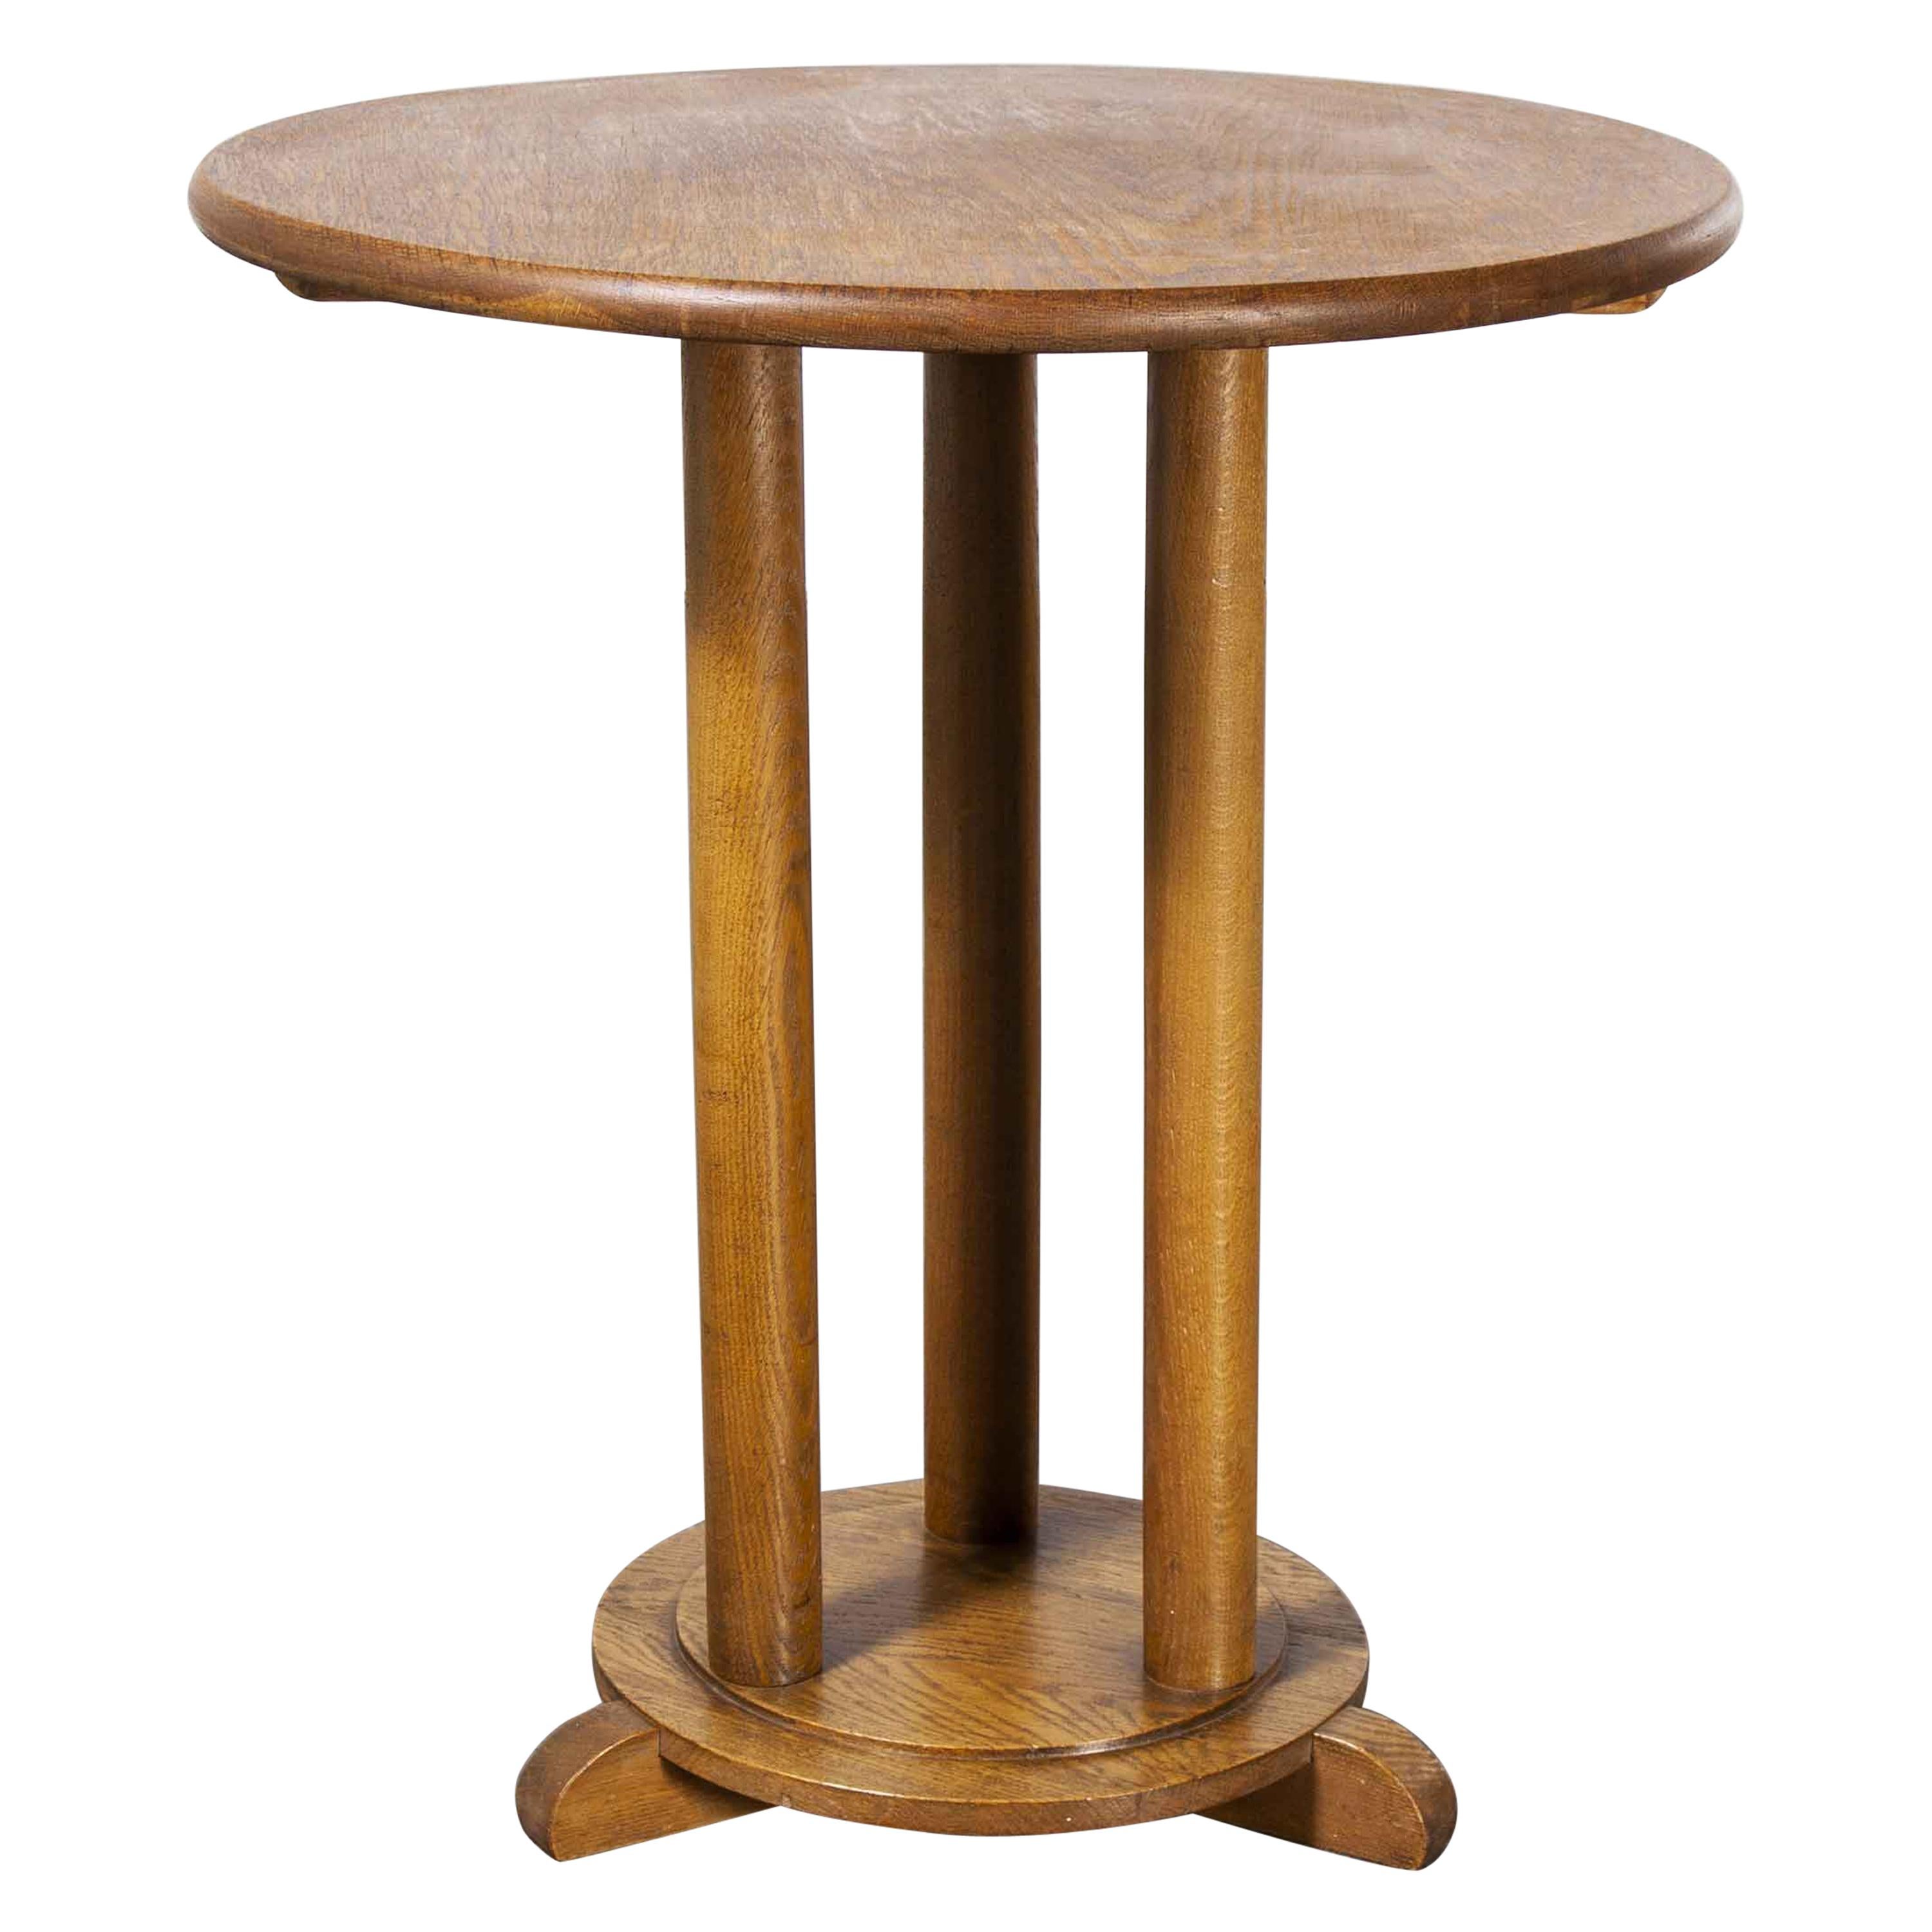 1940's Circular Side Table, Three Column Base